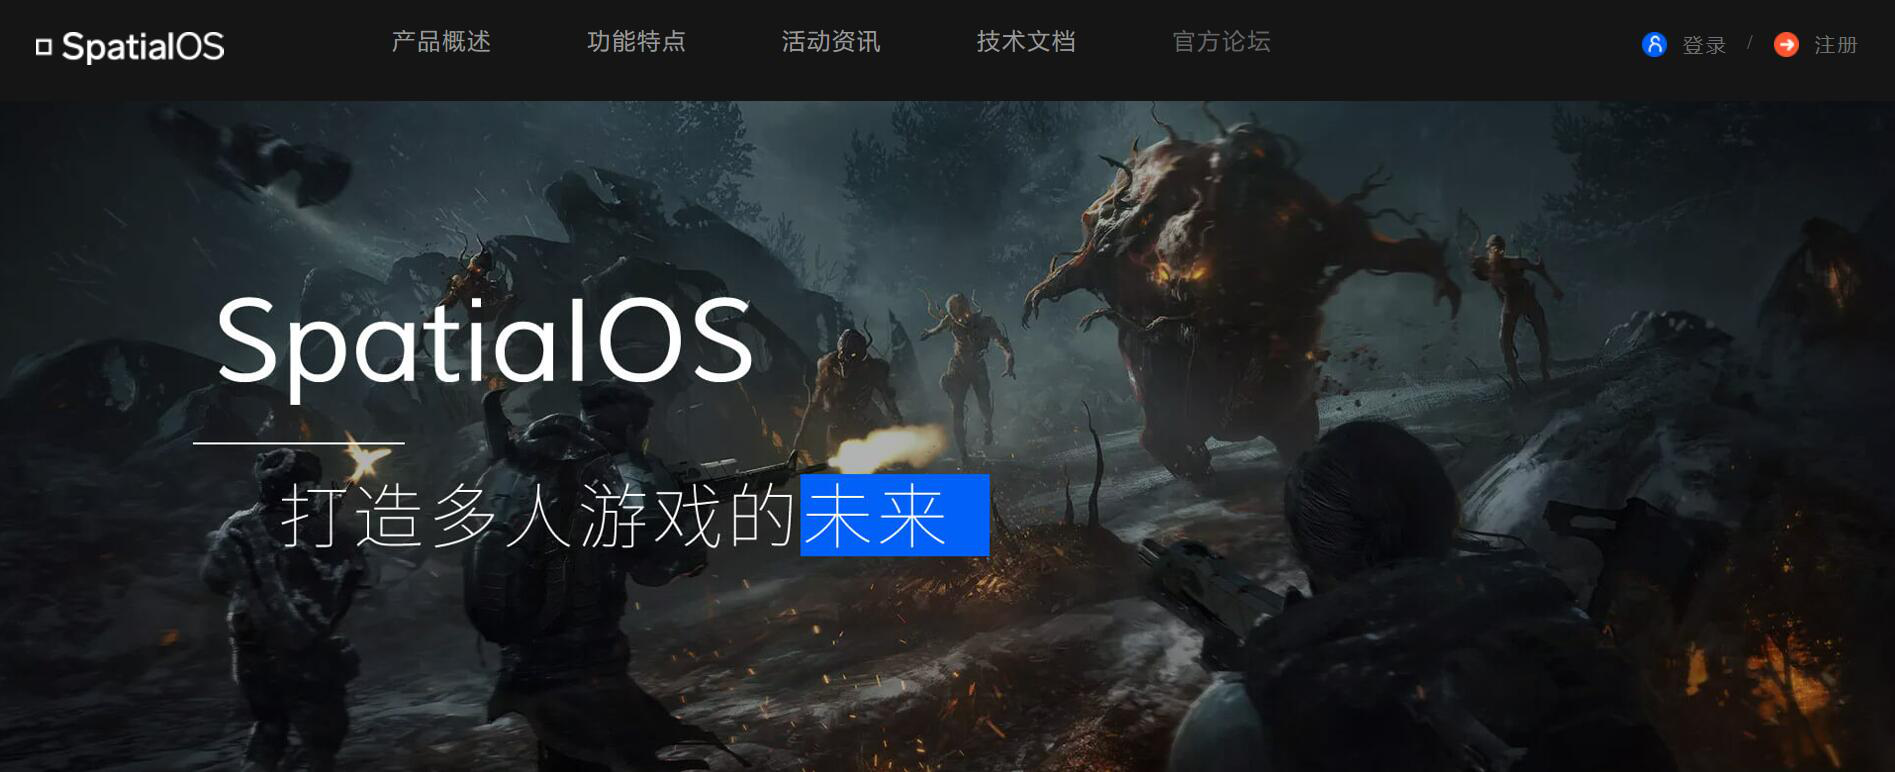 SpatialOS中国官网正式上线